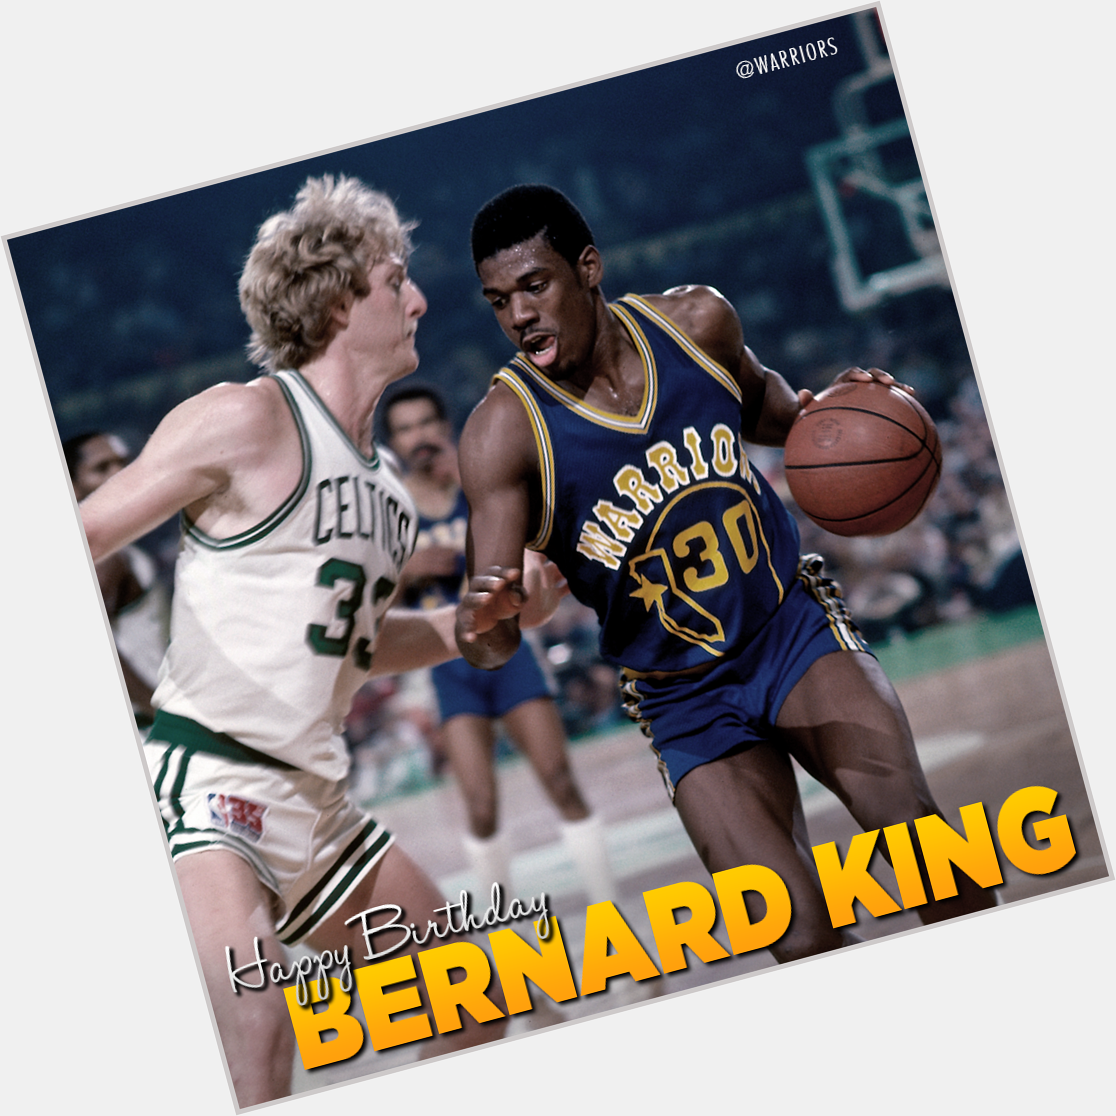  " Happy Birthday to Hall of Famer & legend Bernard King! 